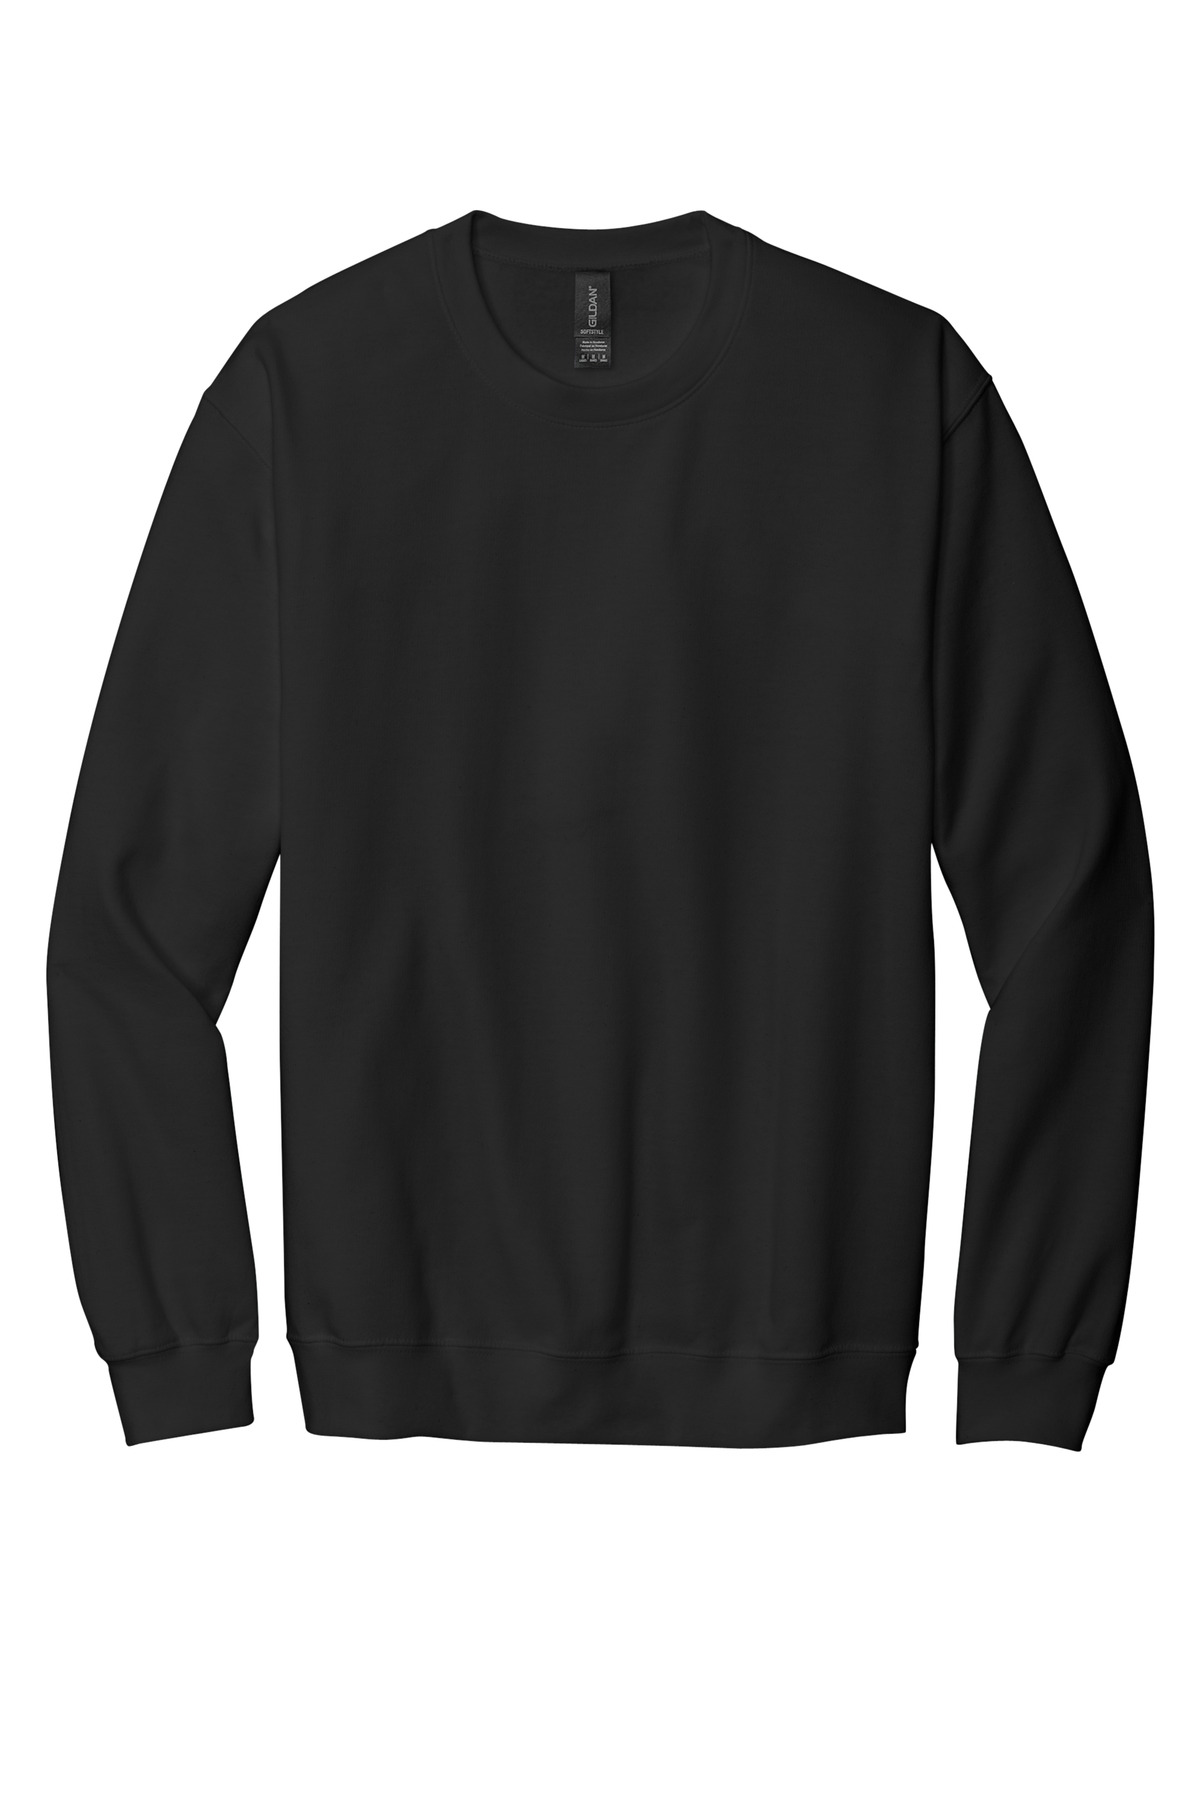 Buy Gildan Softstyle Crewneck Sweatshirt - Gildan Online at Best price - FL